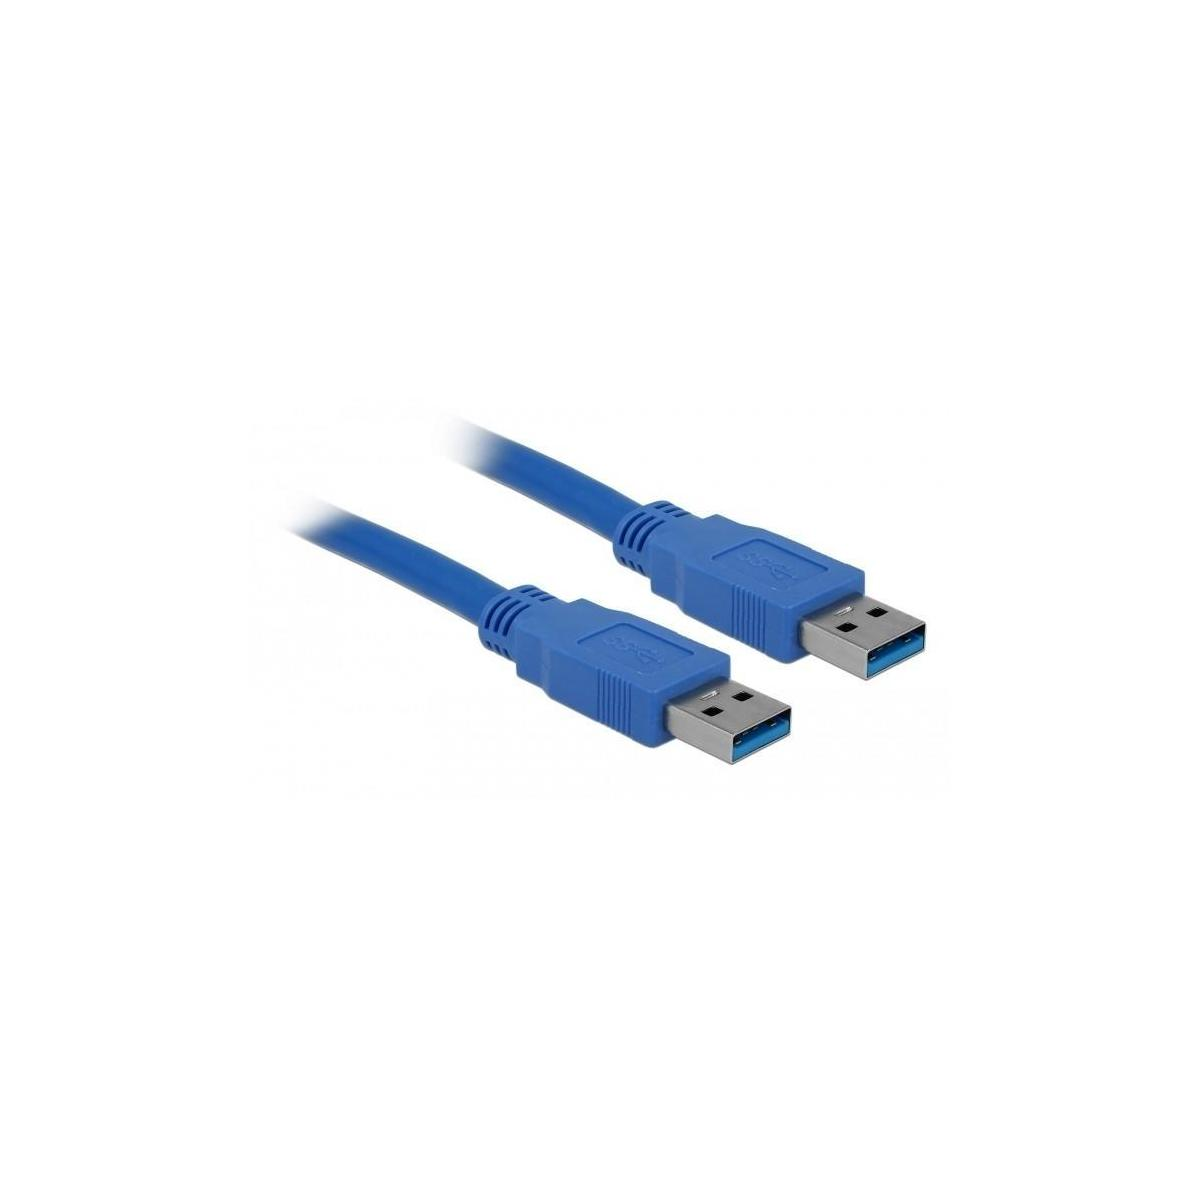 DELOCK 82537 USB Kabel, Blau